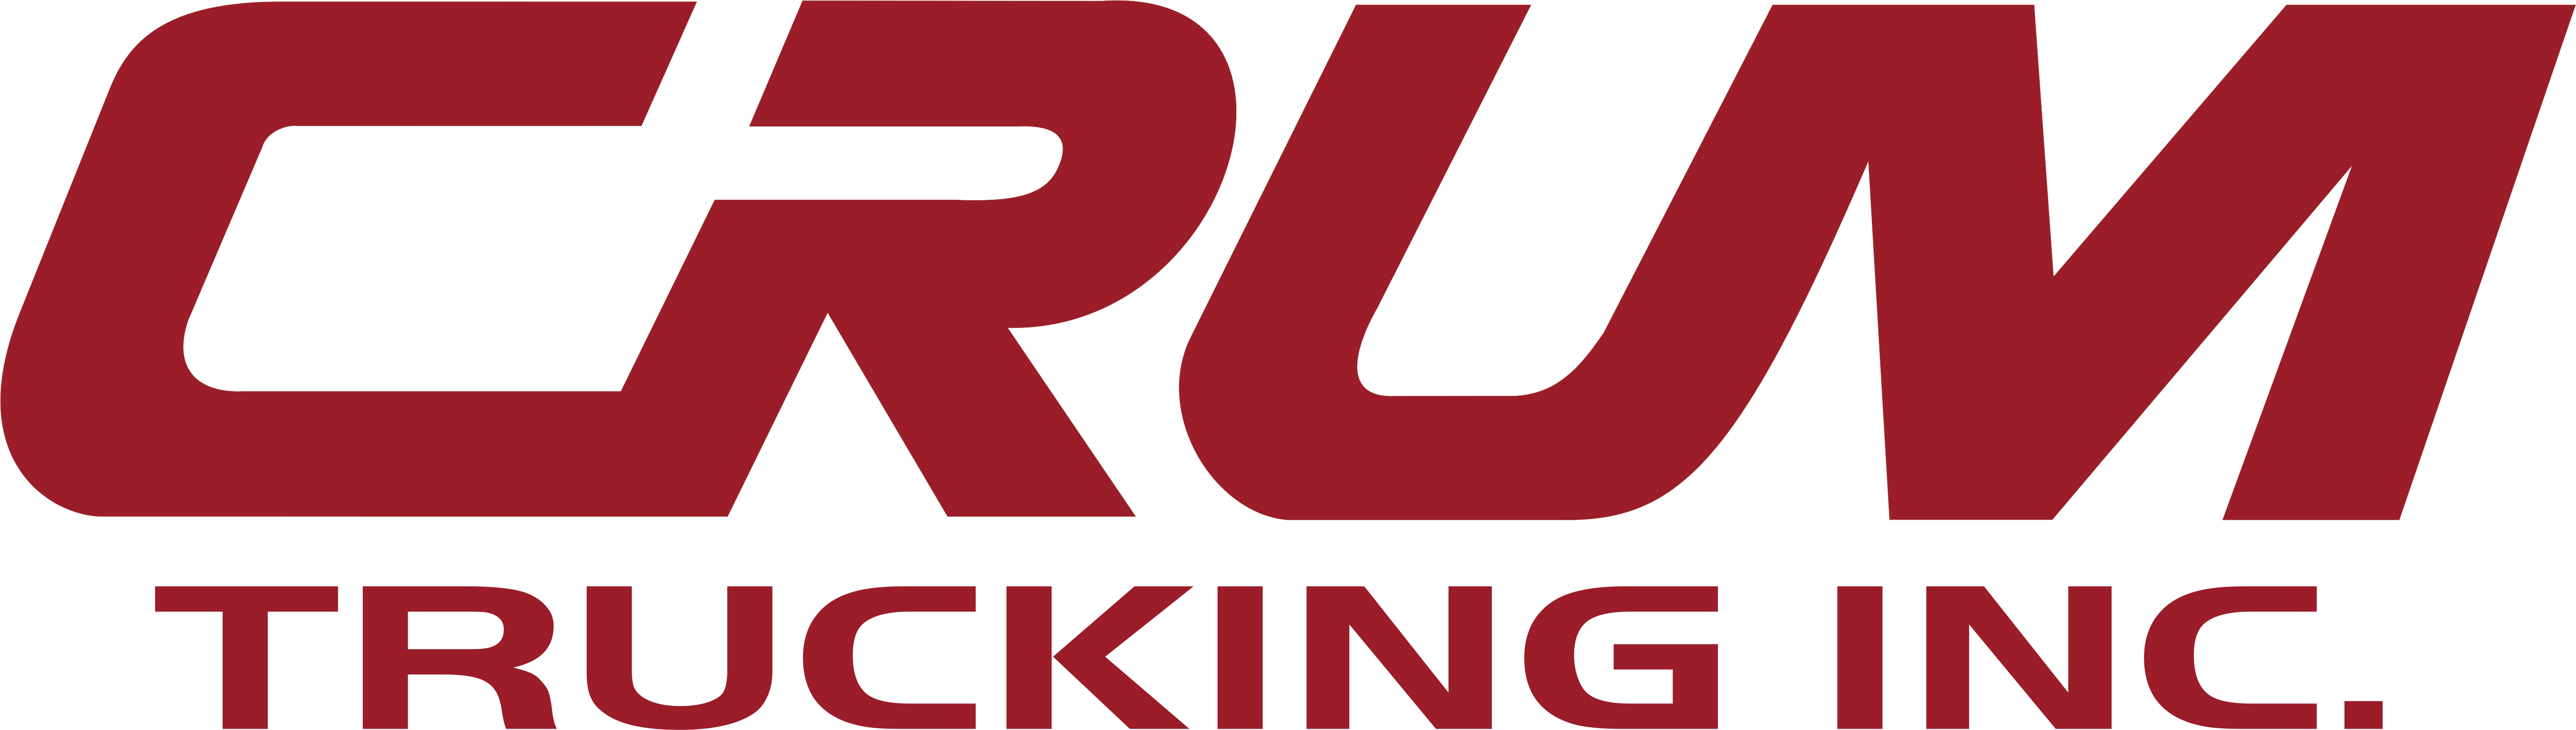 Crum Trucking Company Logo